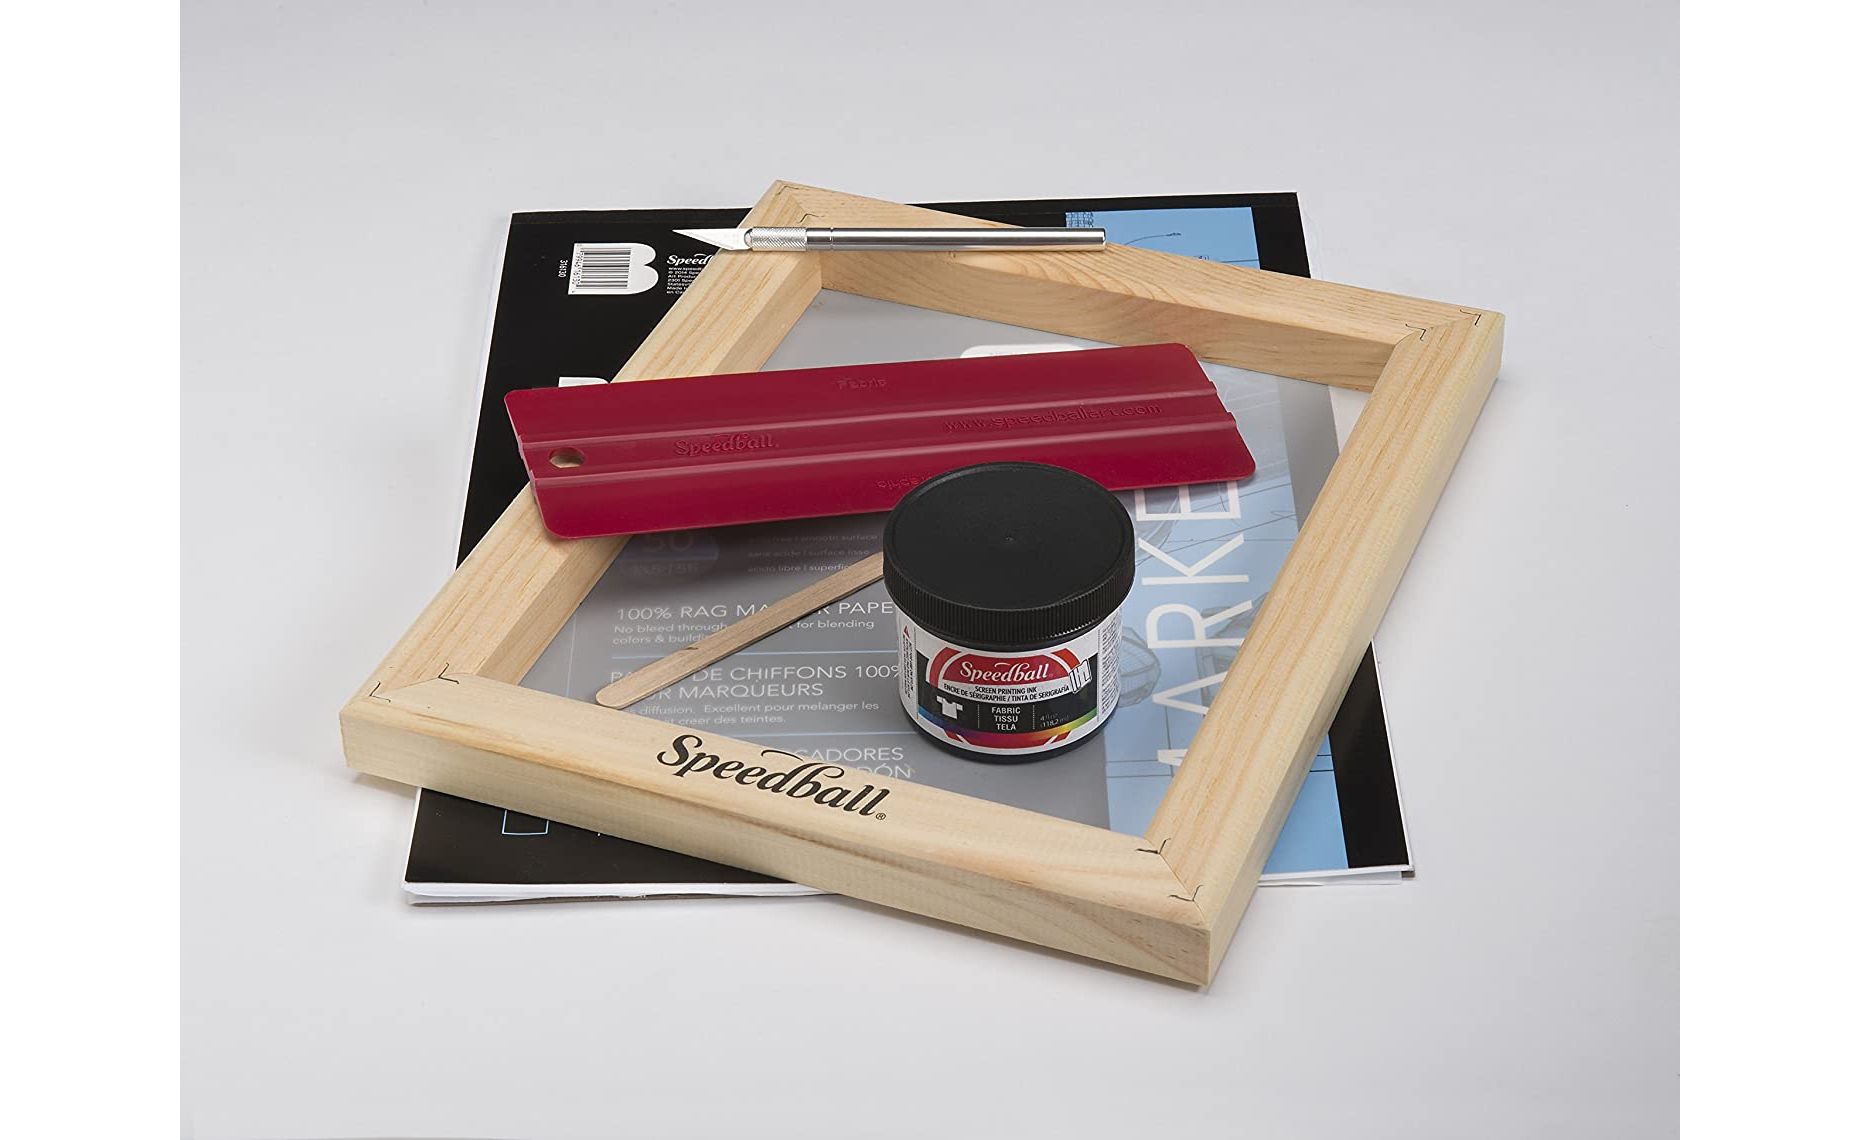 Speedball Beginner Screen Printing Craft Vinyl Kit